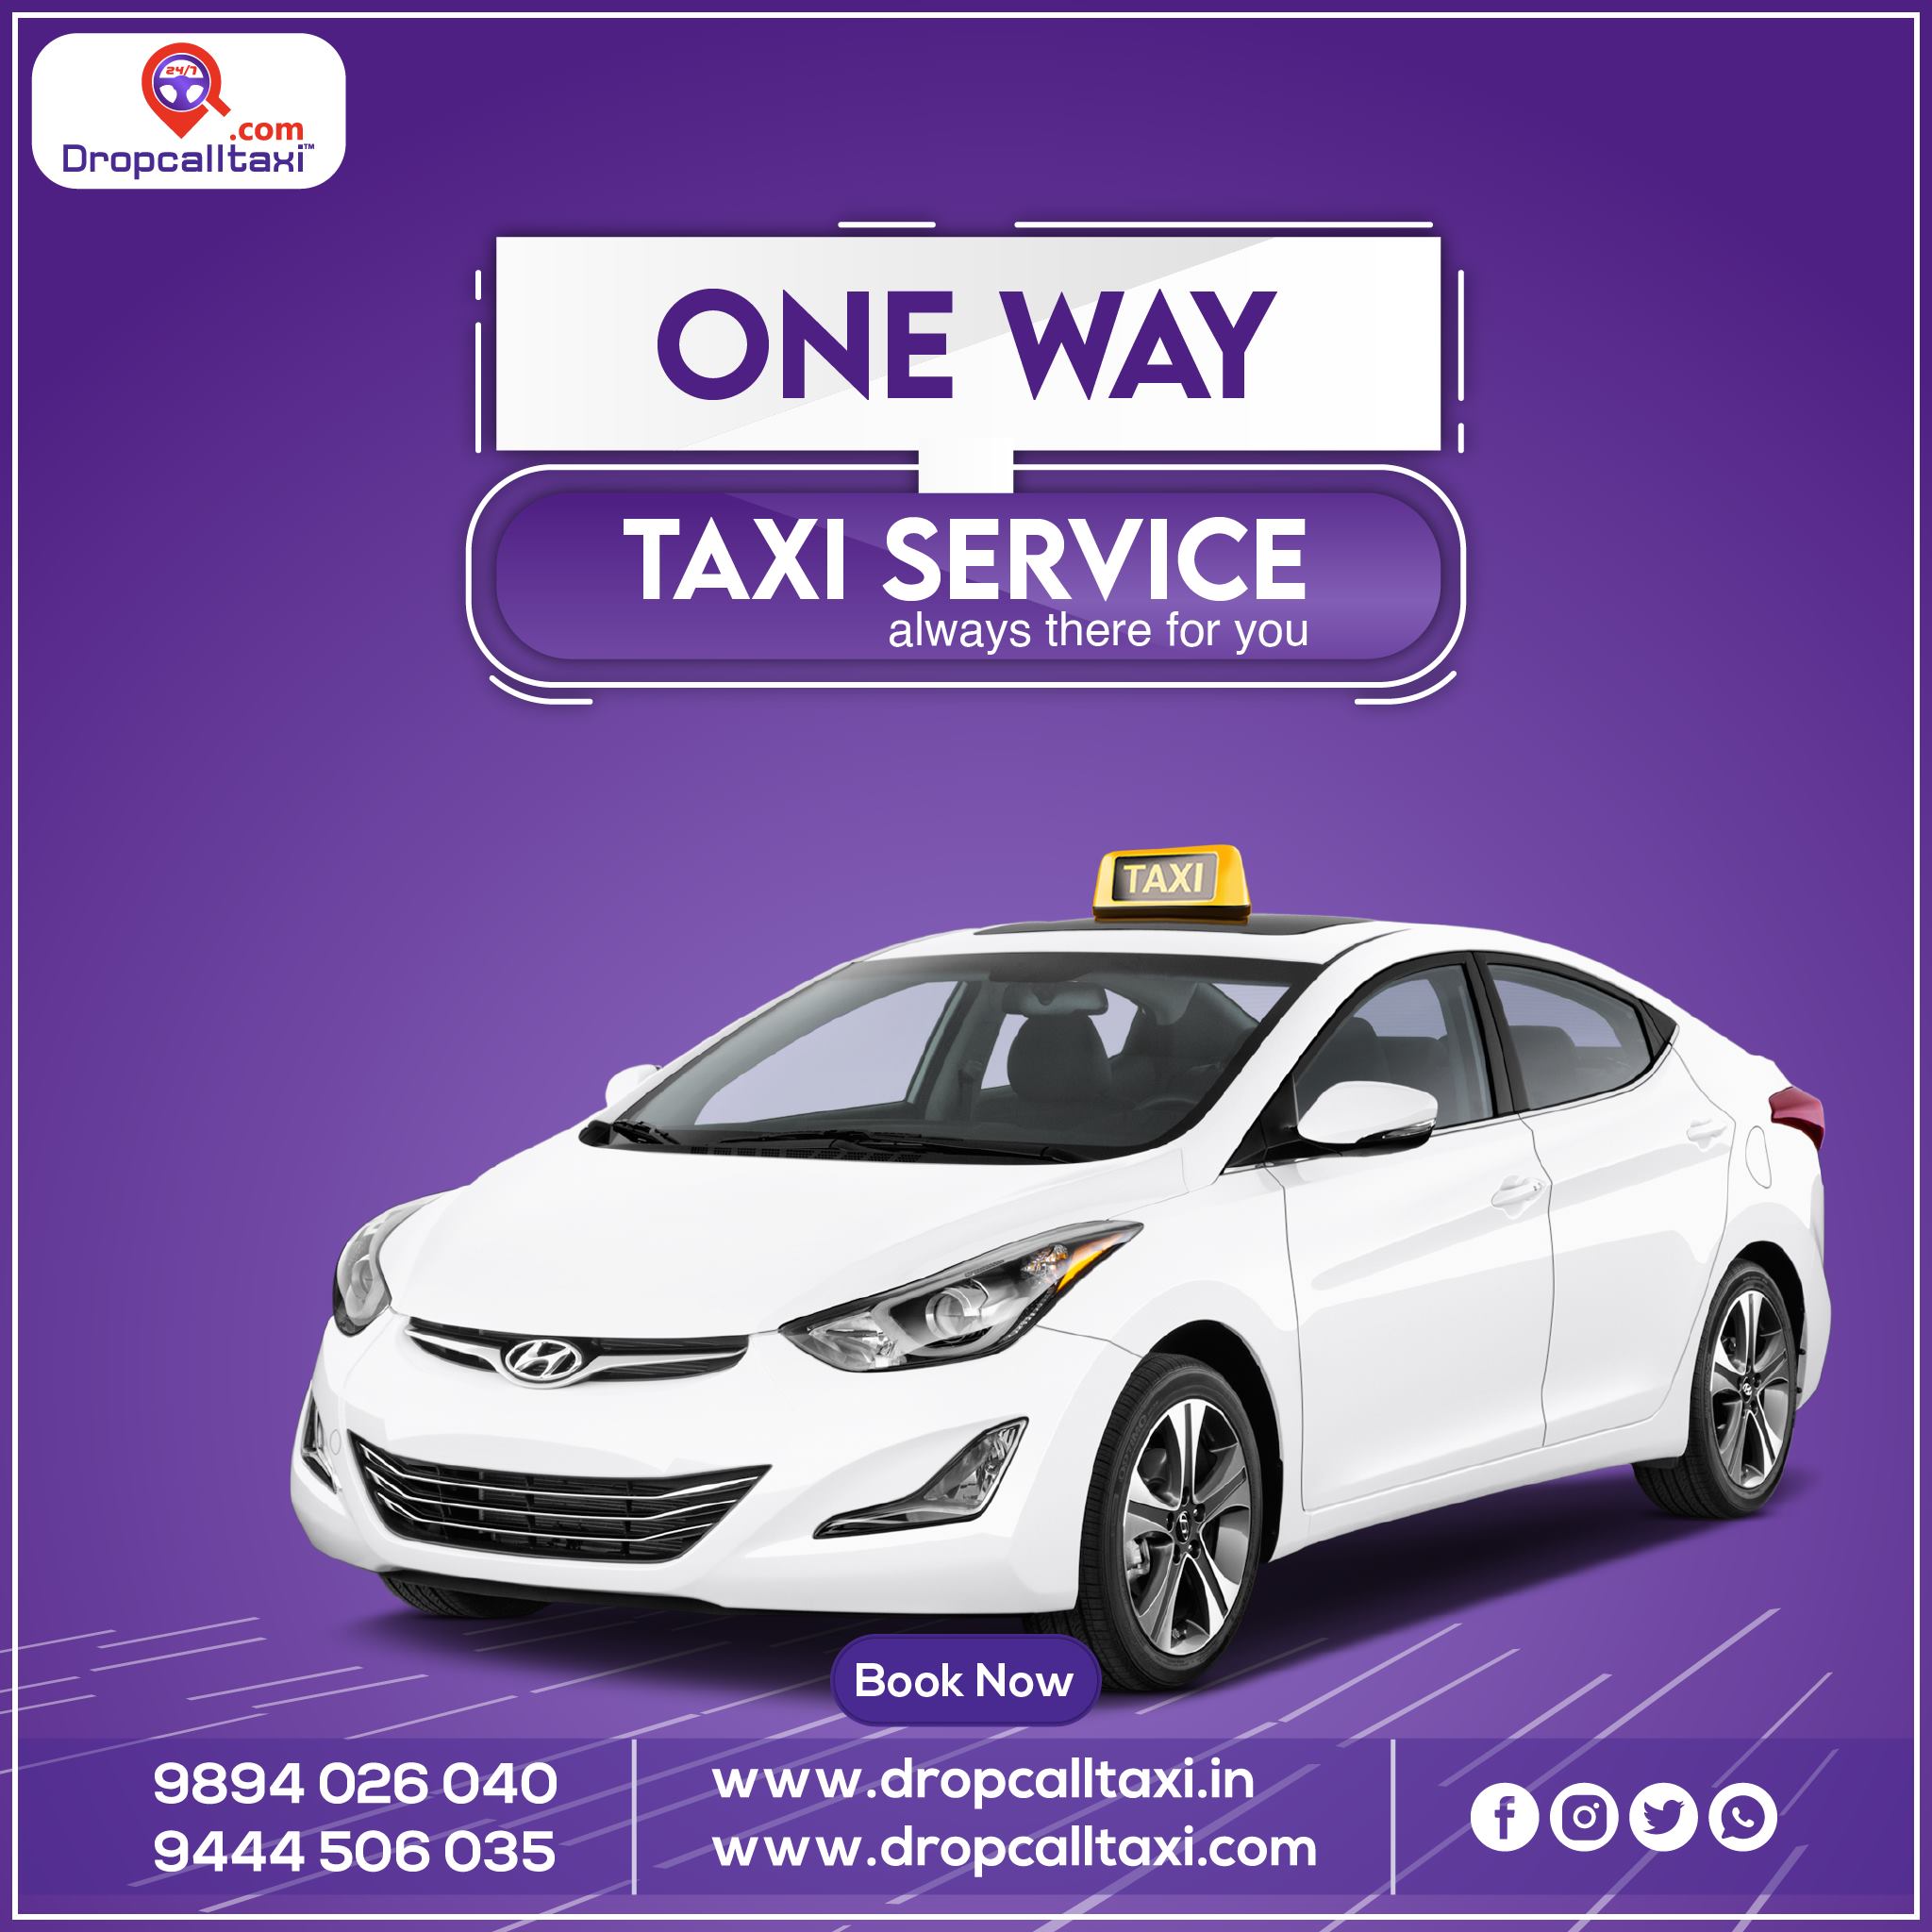 Drop Call Taxi Hosur, Krishnagiri and Vellore one way taxi service